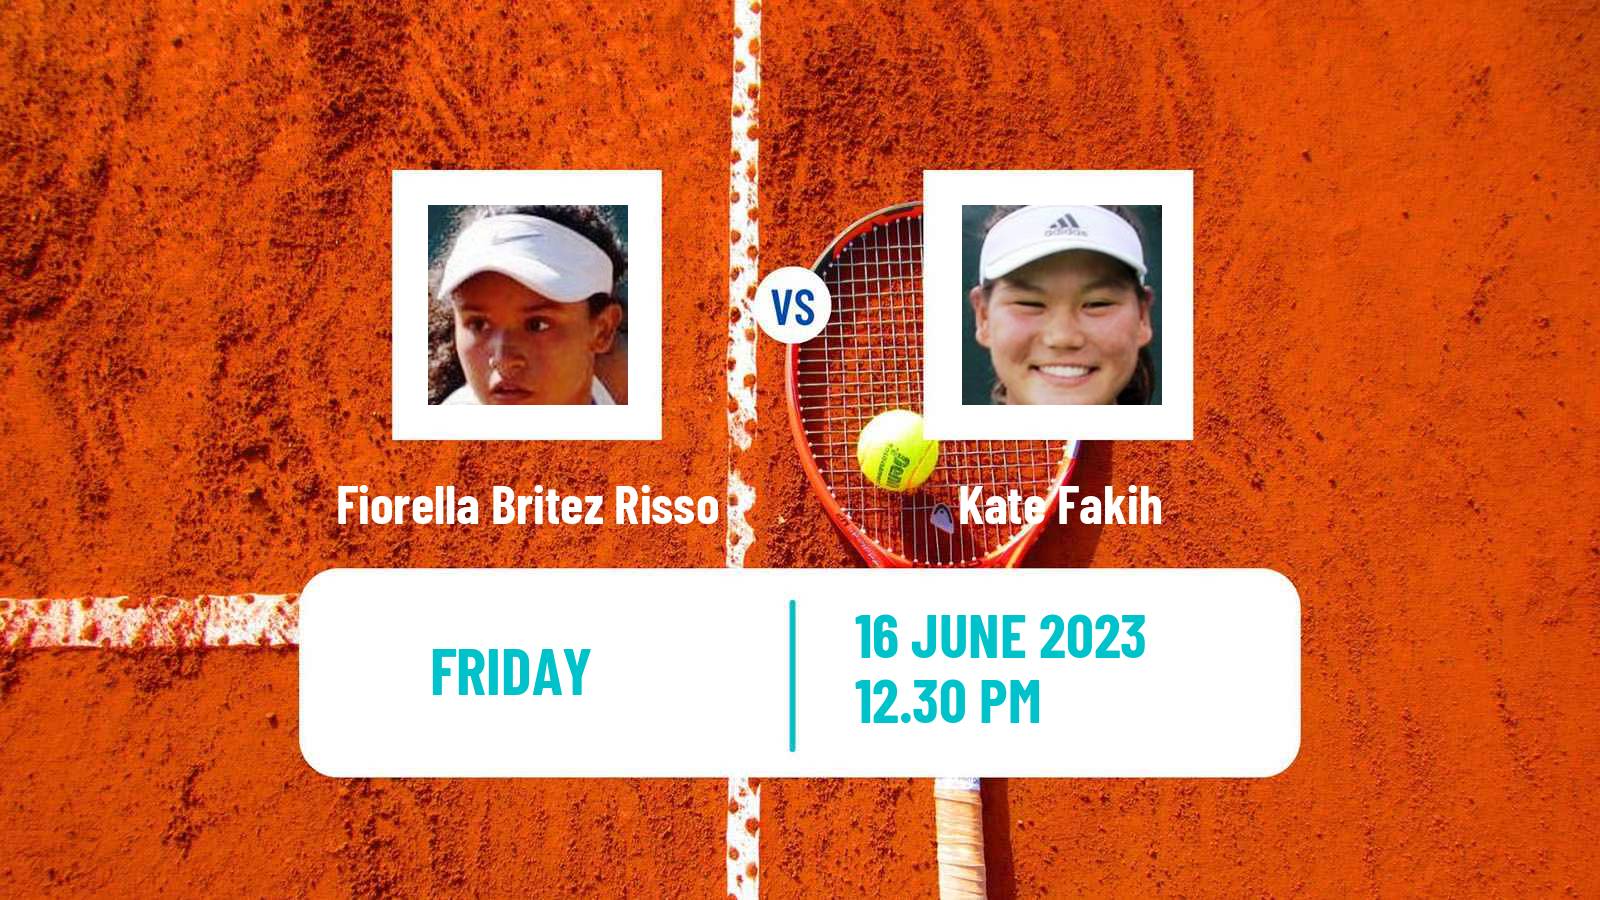 Tennis ITF W15 San Diego Ca 2 Women Fiorella Britez Risso - Kate Fakih